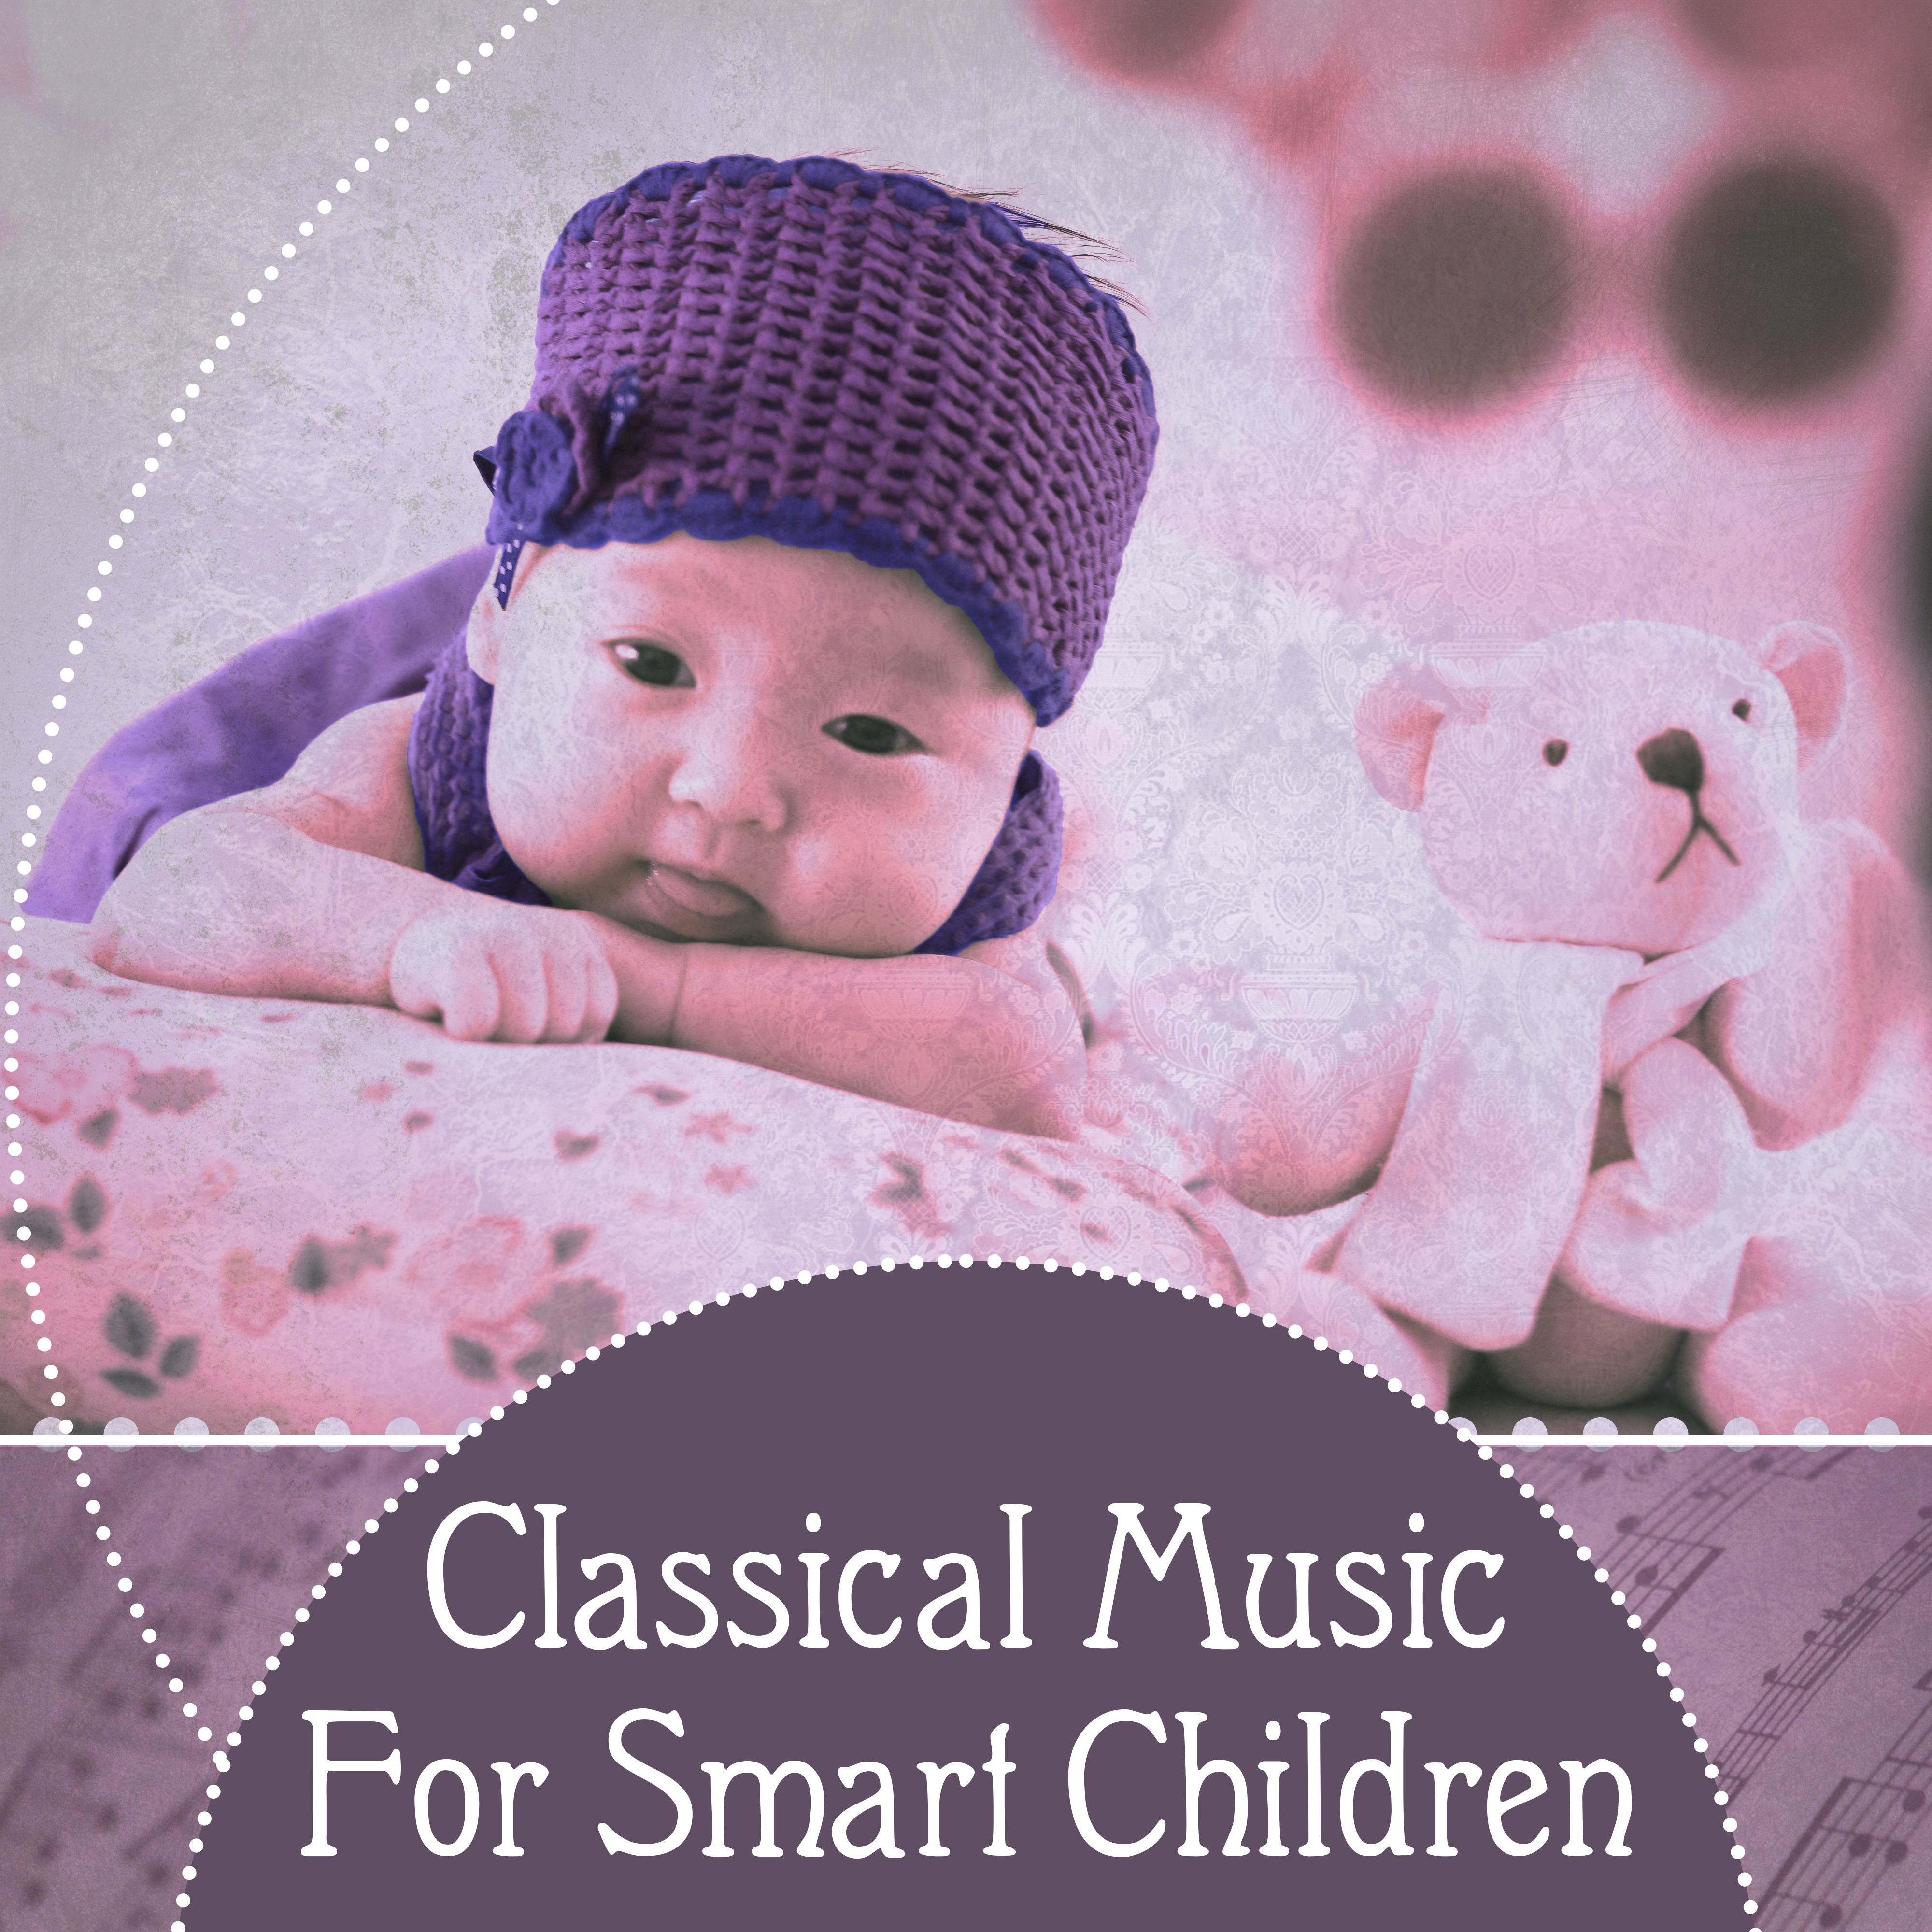 Classical Music For Smart Children  Classical Music for Babies to Stimulate Brain Development, Einstein Bright Effect